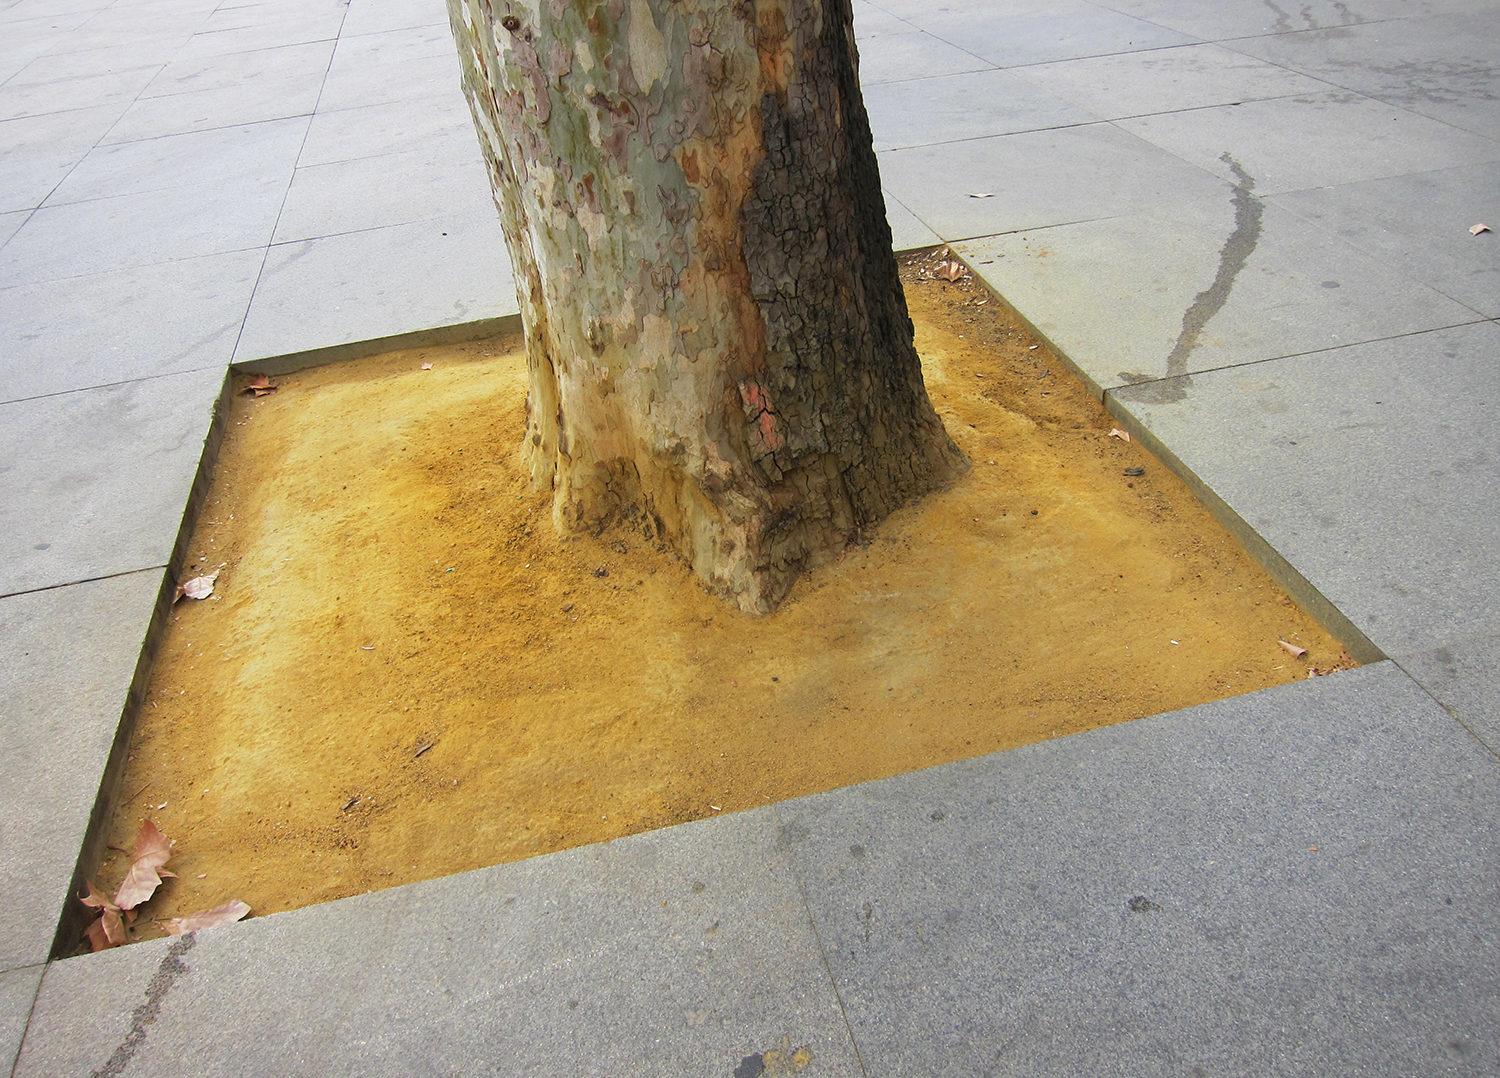 x Loop 5 image 6 Madrid 2012 tree trunk in yellow dirt in pavement.jpg